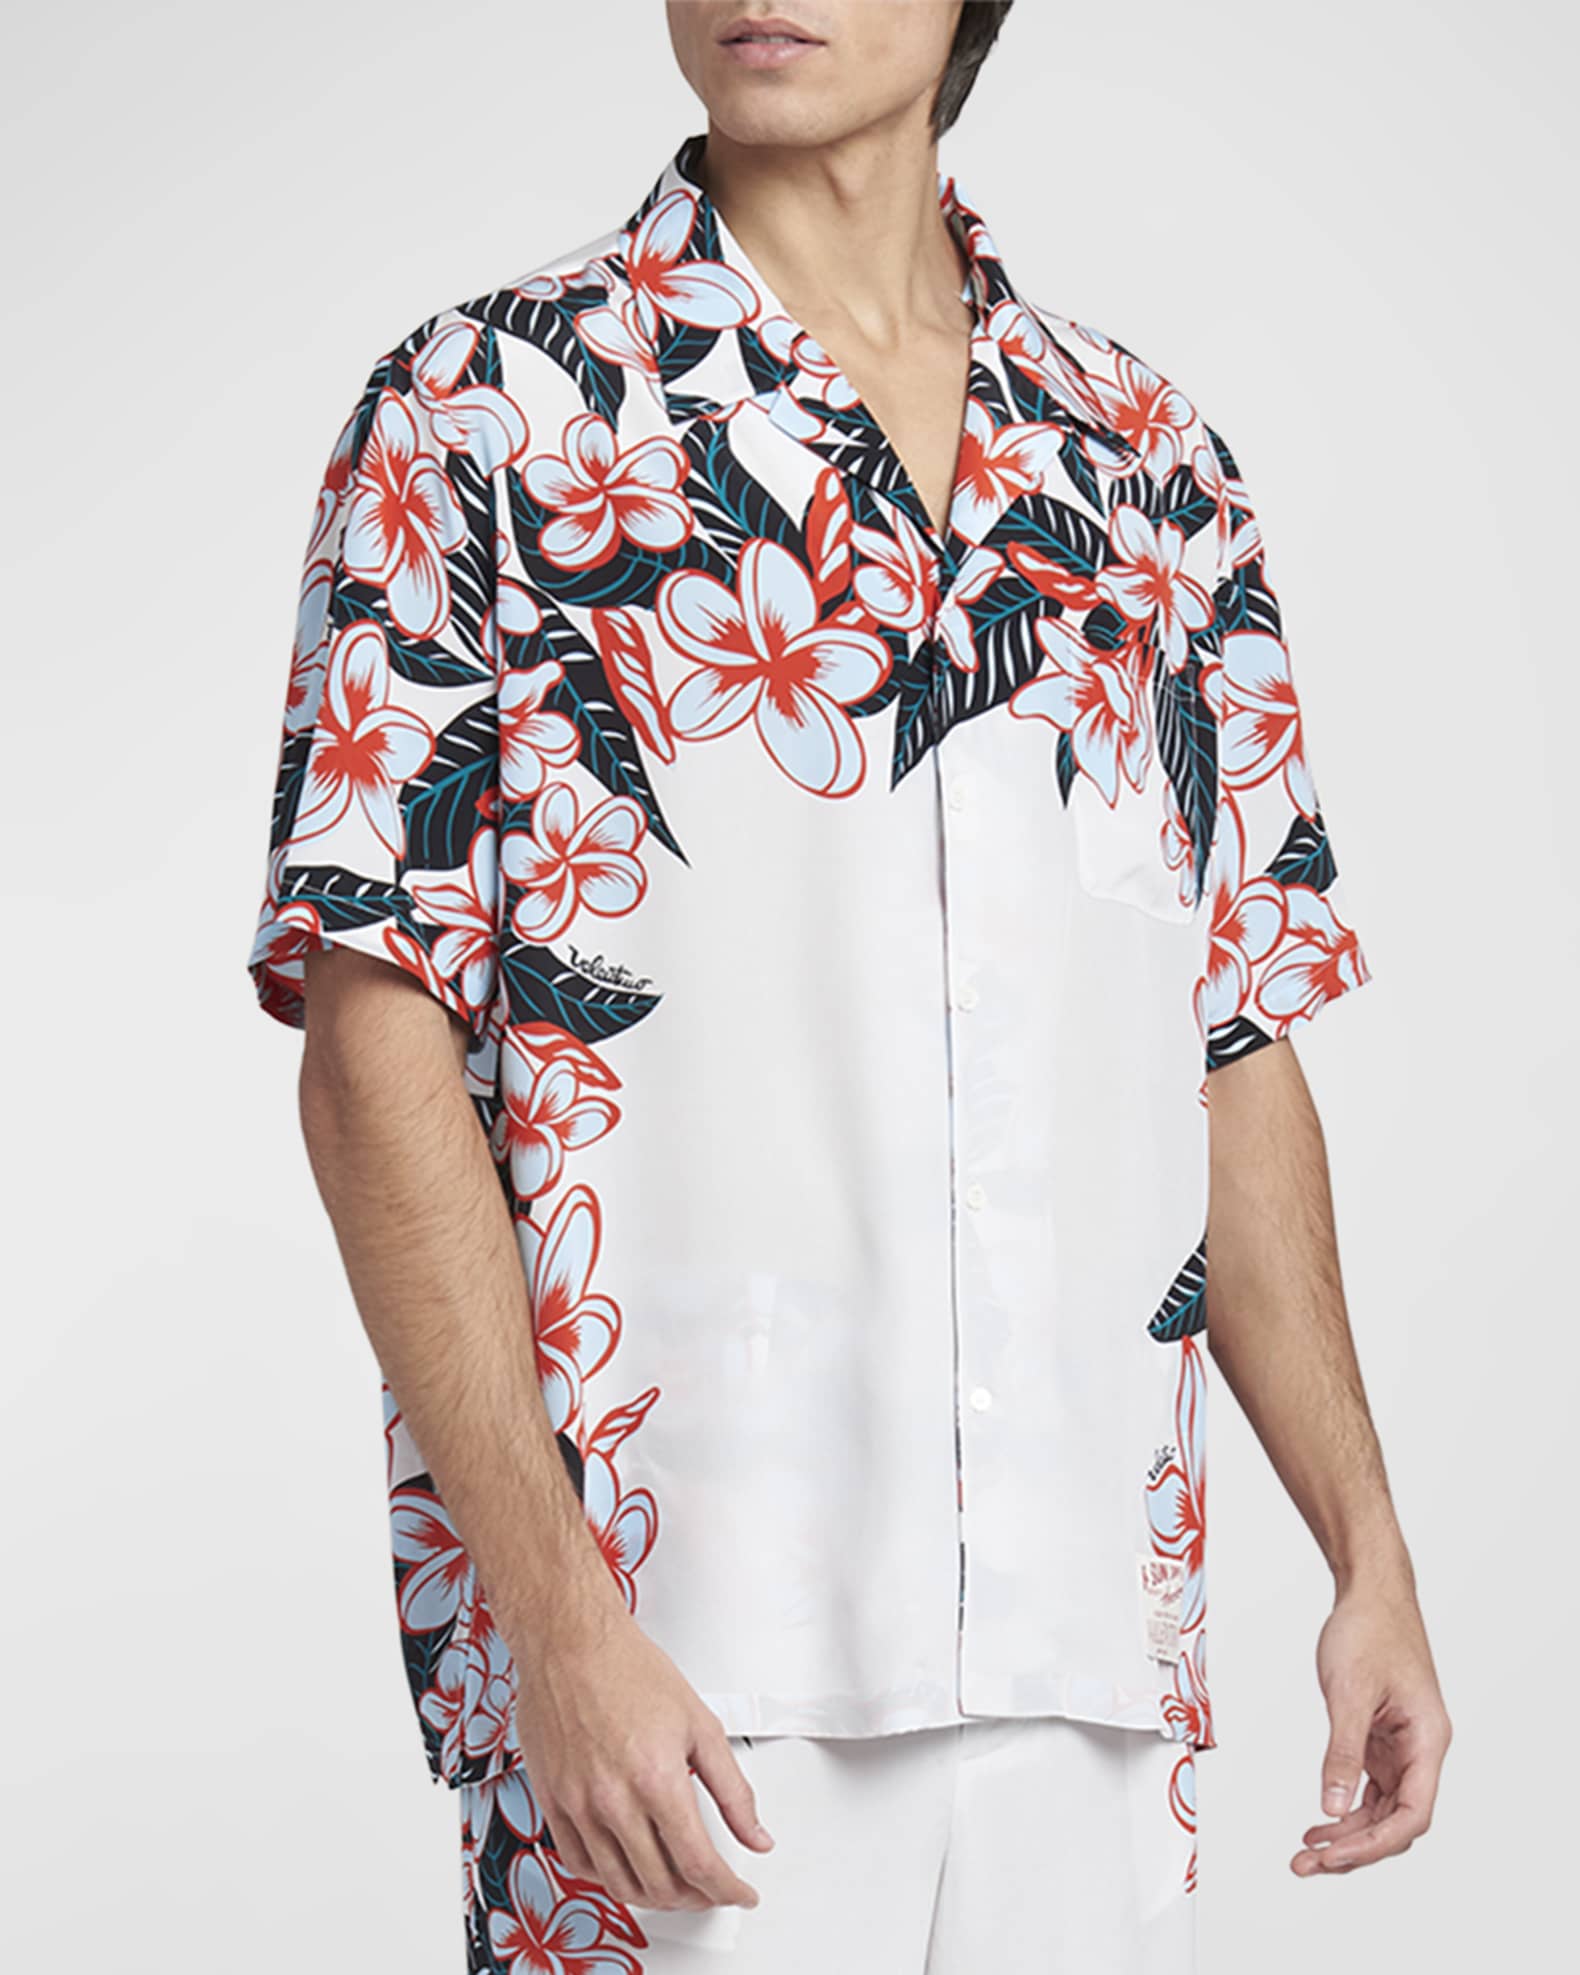 Top-selling item] Versace Monogram Gold Logo Hawaiian Shirt Beach Shorts  And Flip Flops